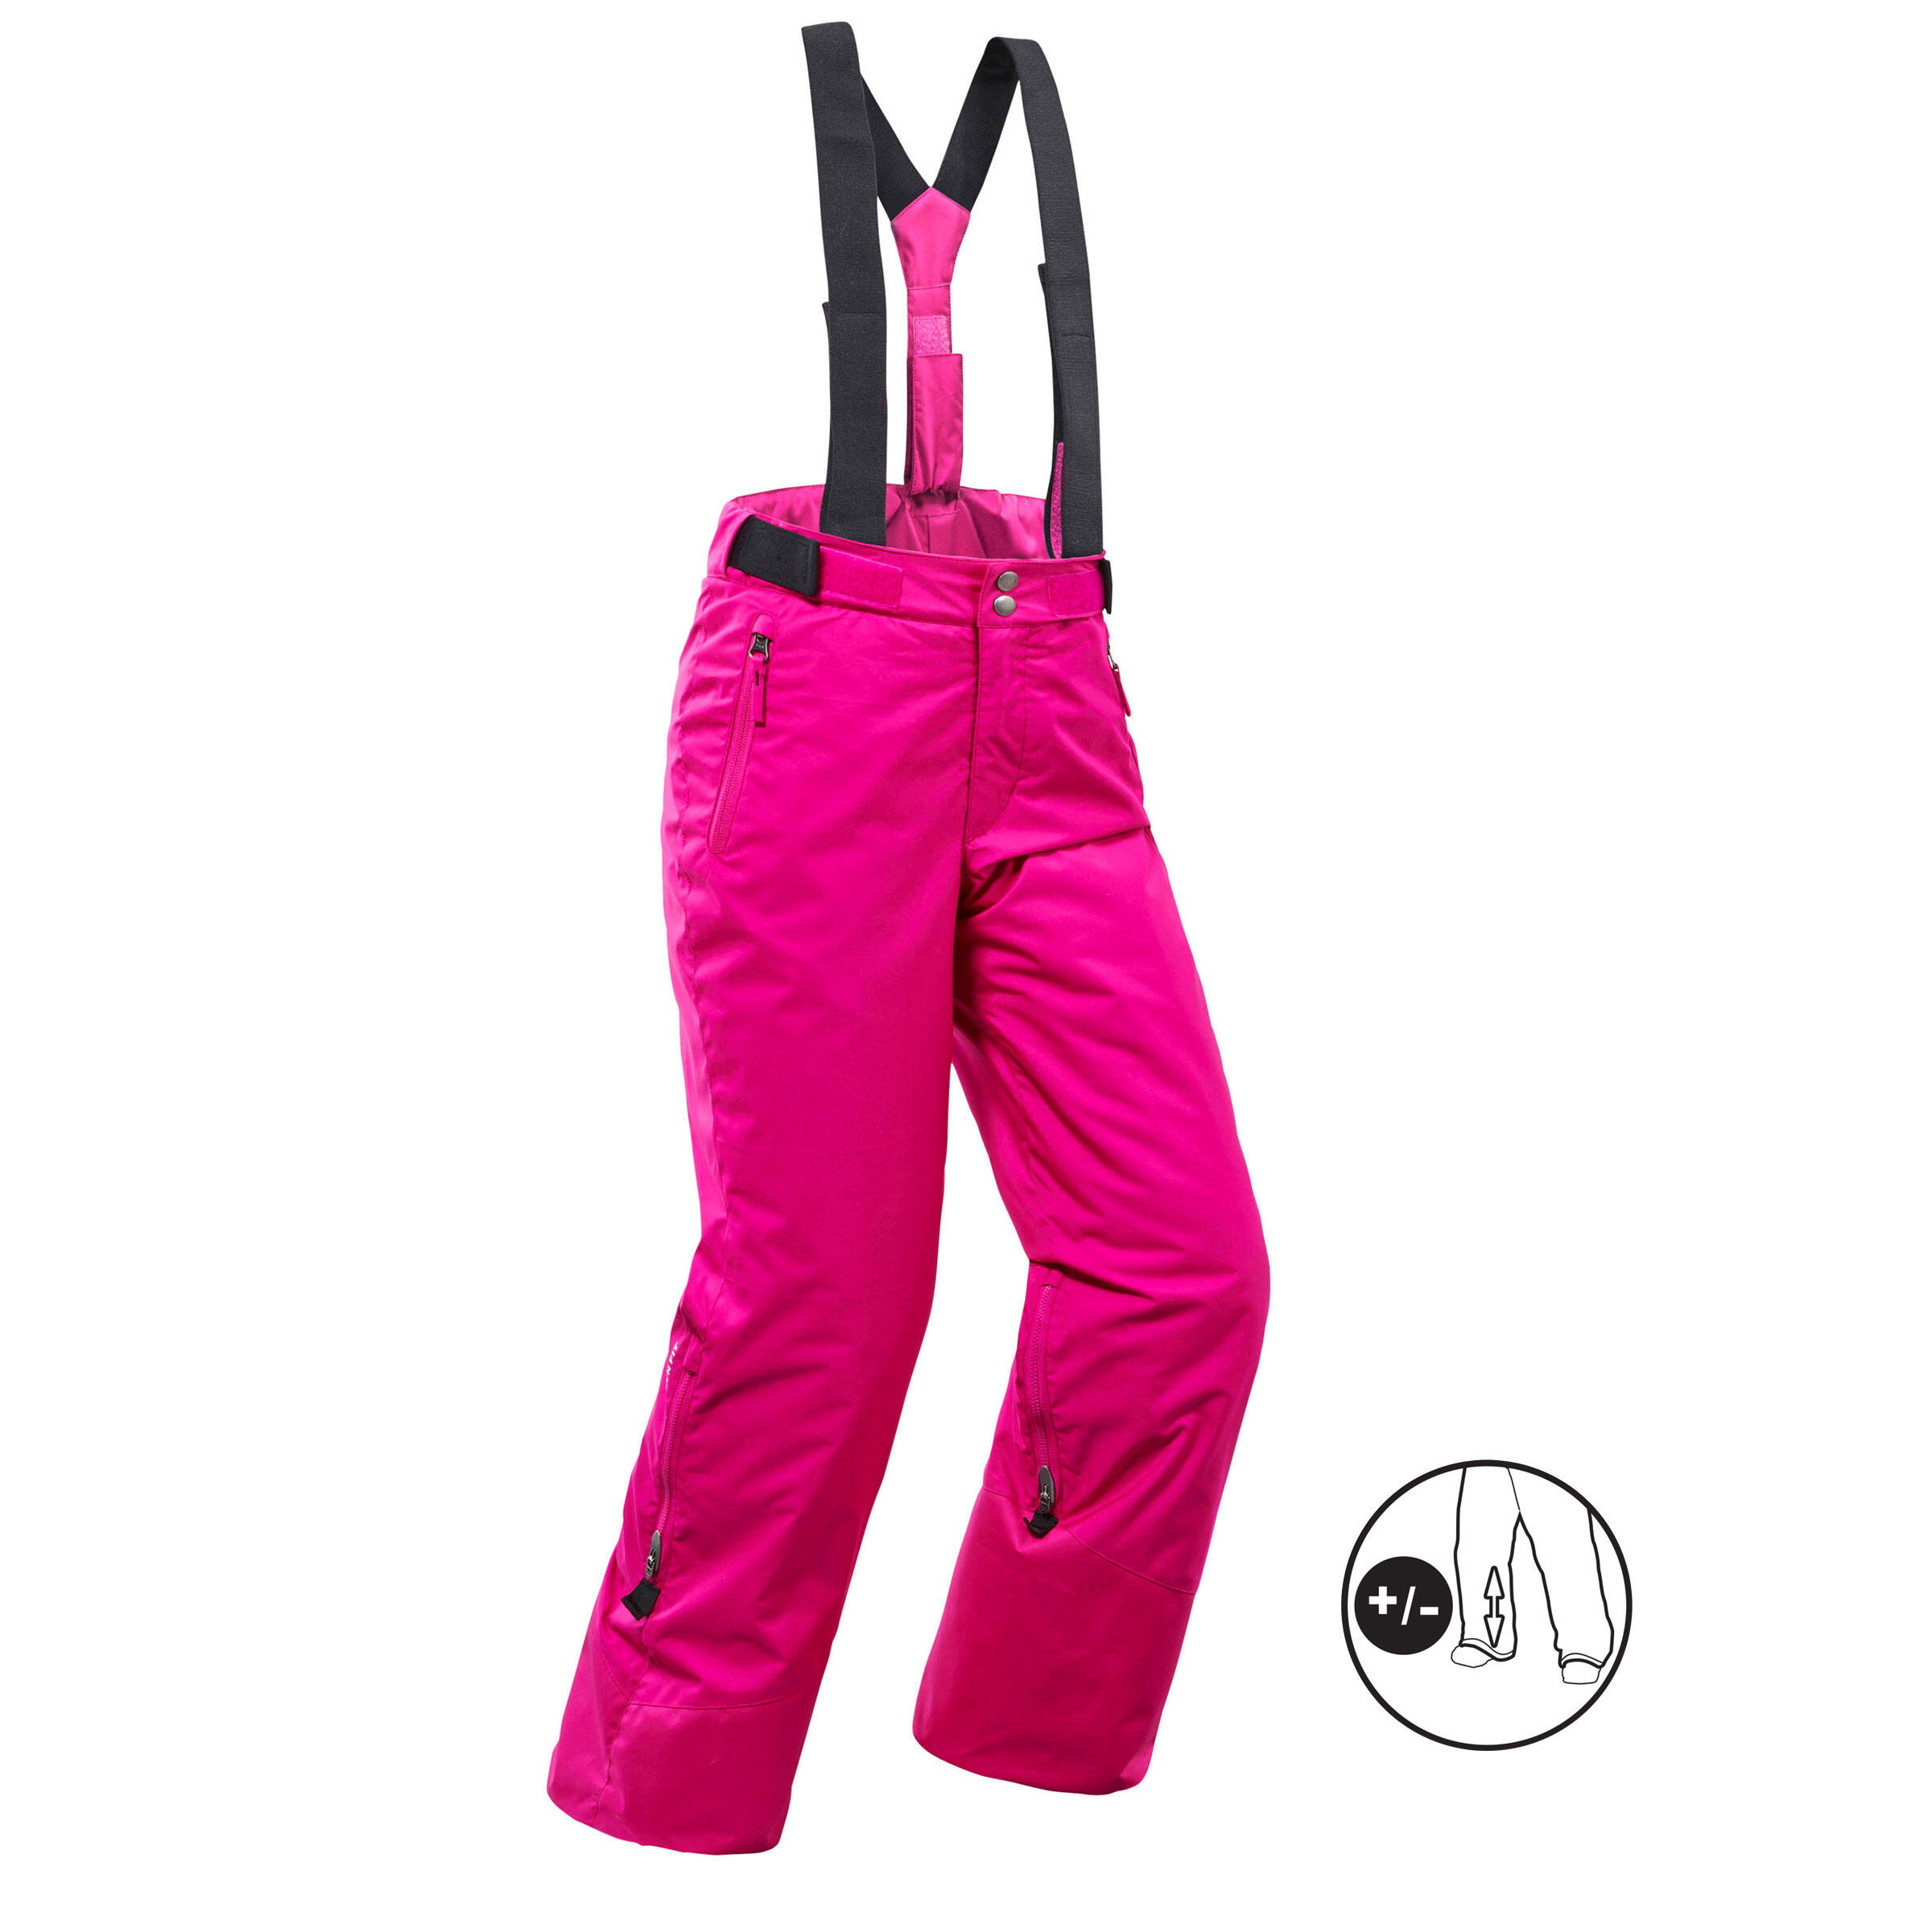 Children's Ski Trousers - Pink 1/9